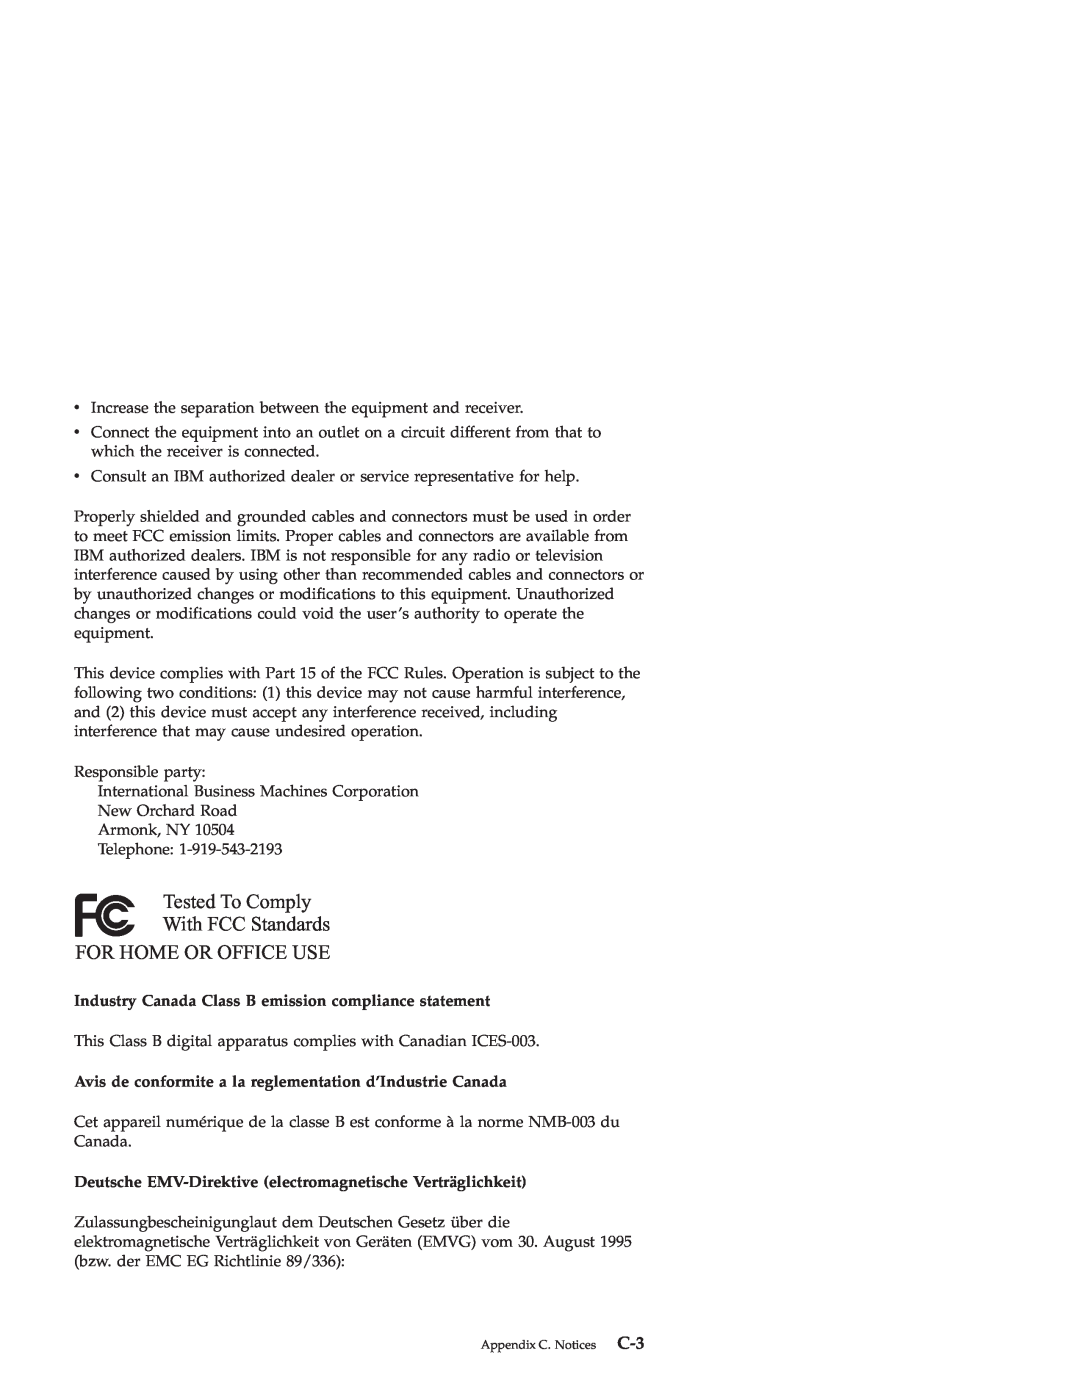 IBM X4 Industry Canada Class B emission compliance statement, Avis de conformite a la reglementation d’Industrie Canada 